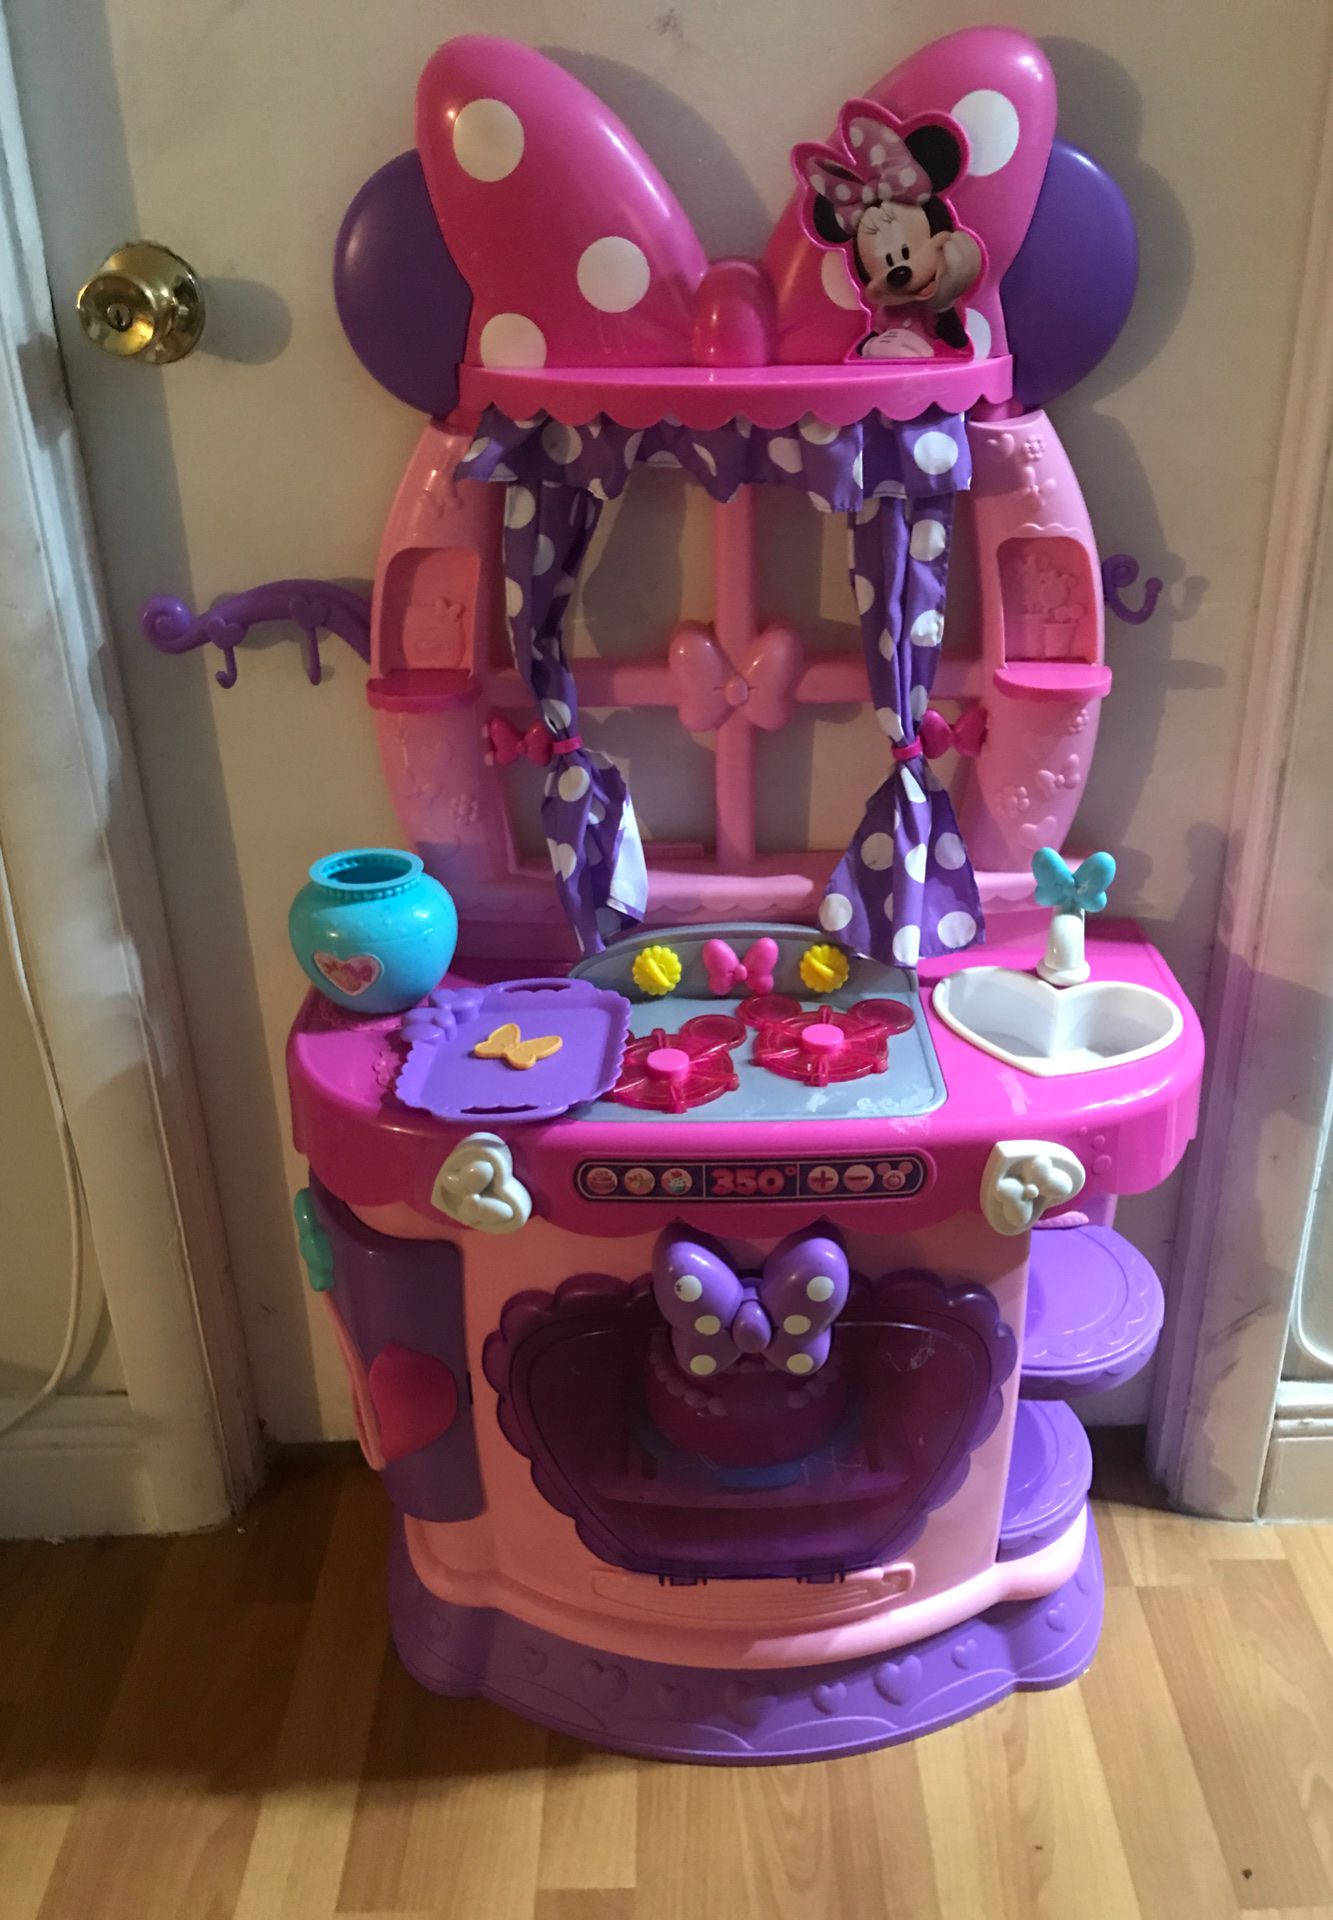 Pink Disney Minnie Mouse kitchen set for girls